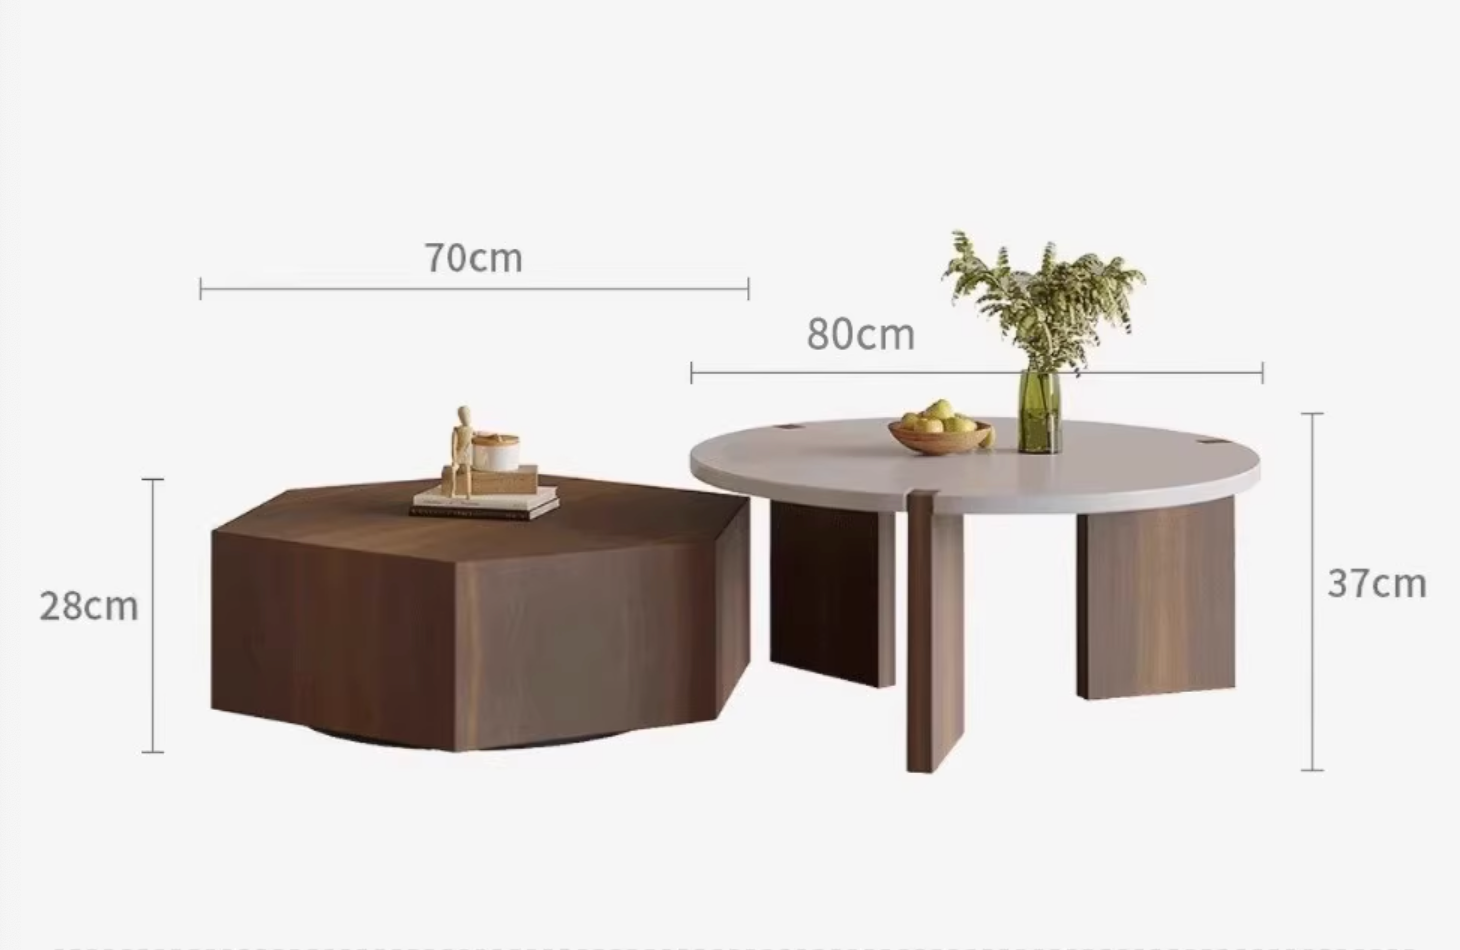 Darius Coffee Table Set